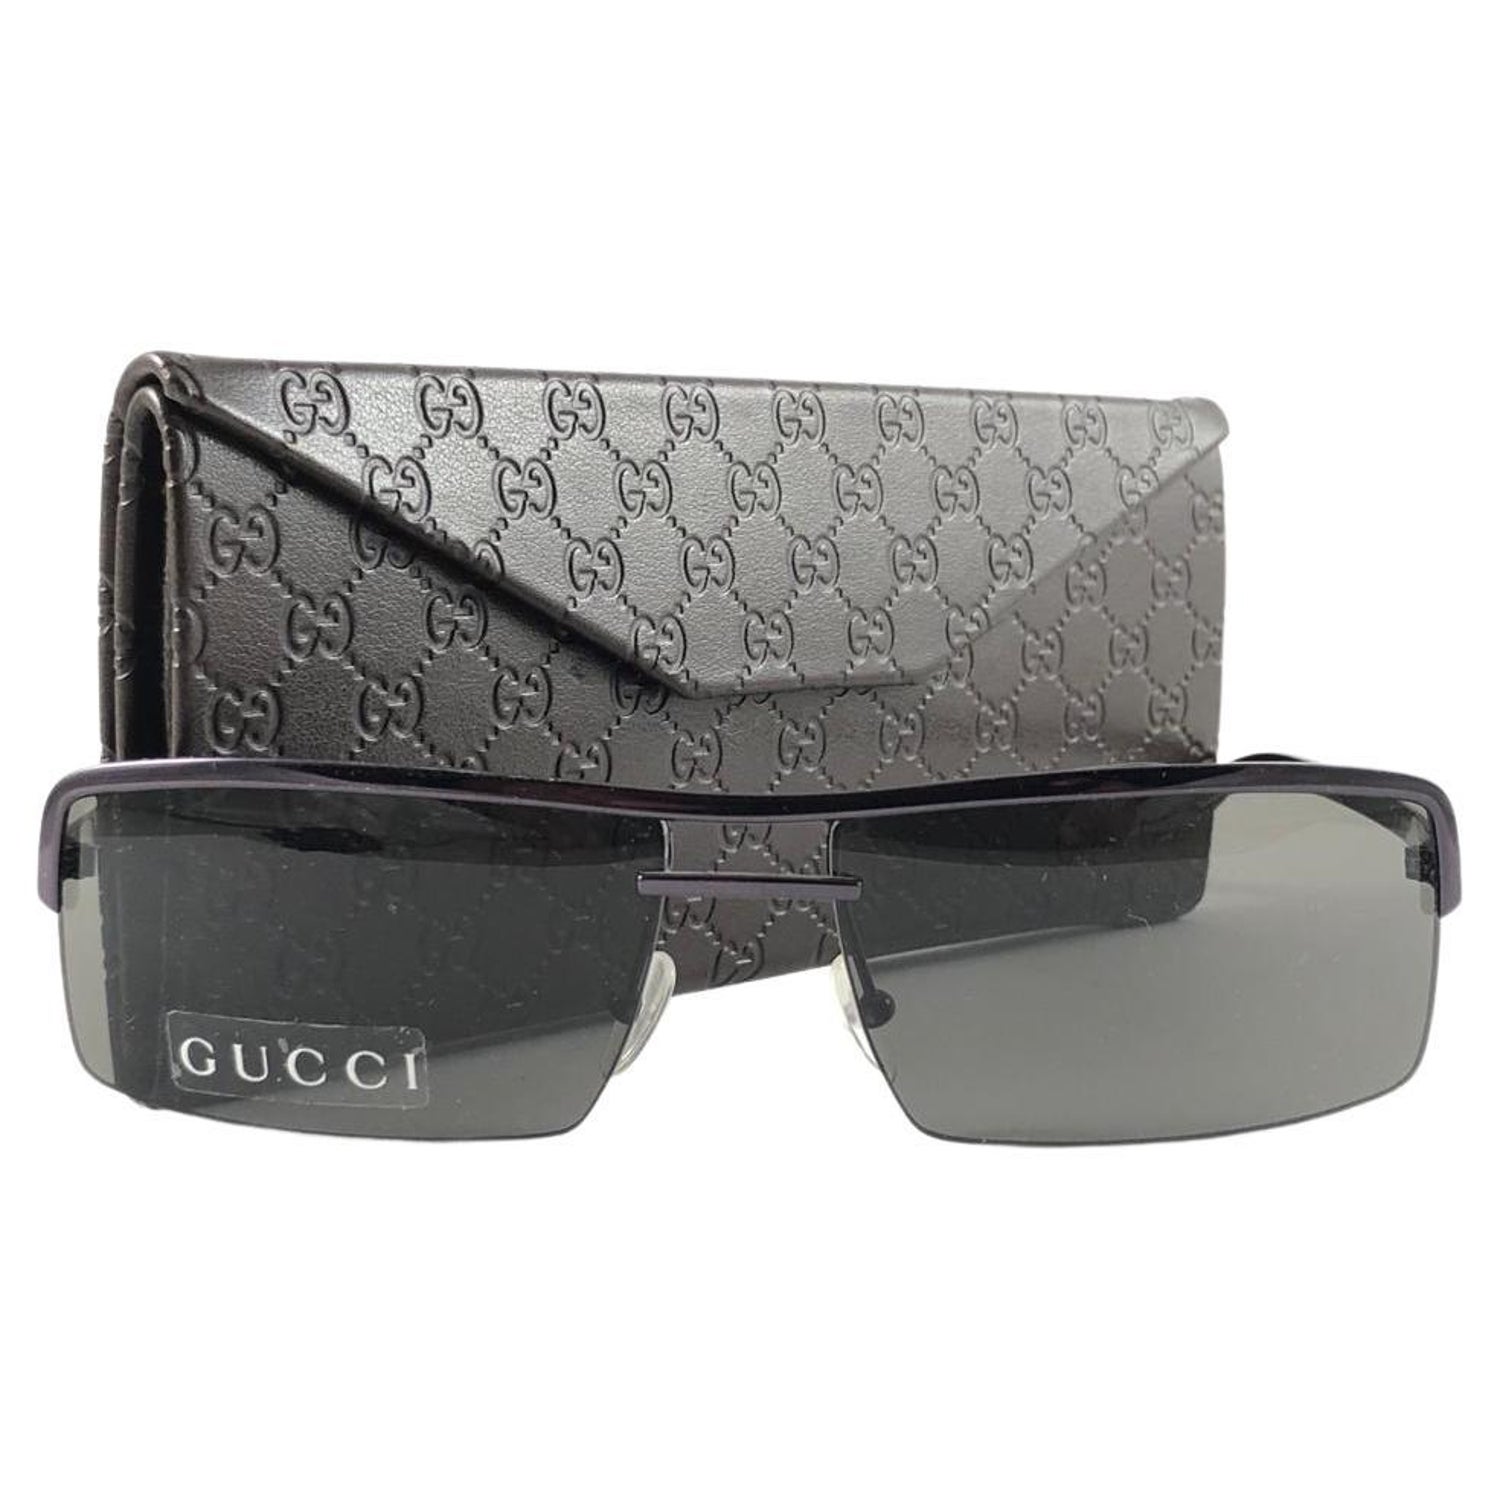 Vintage 90s Gucci Sunglasses - 5 For Sale on 1stDibs